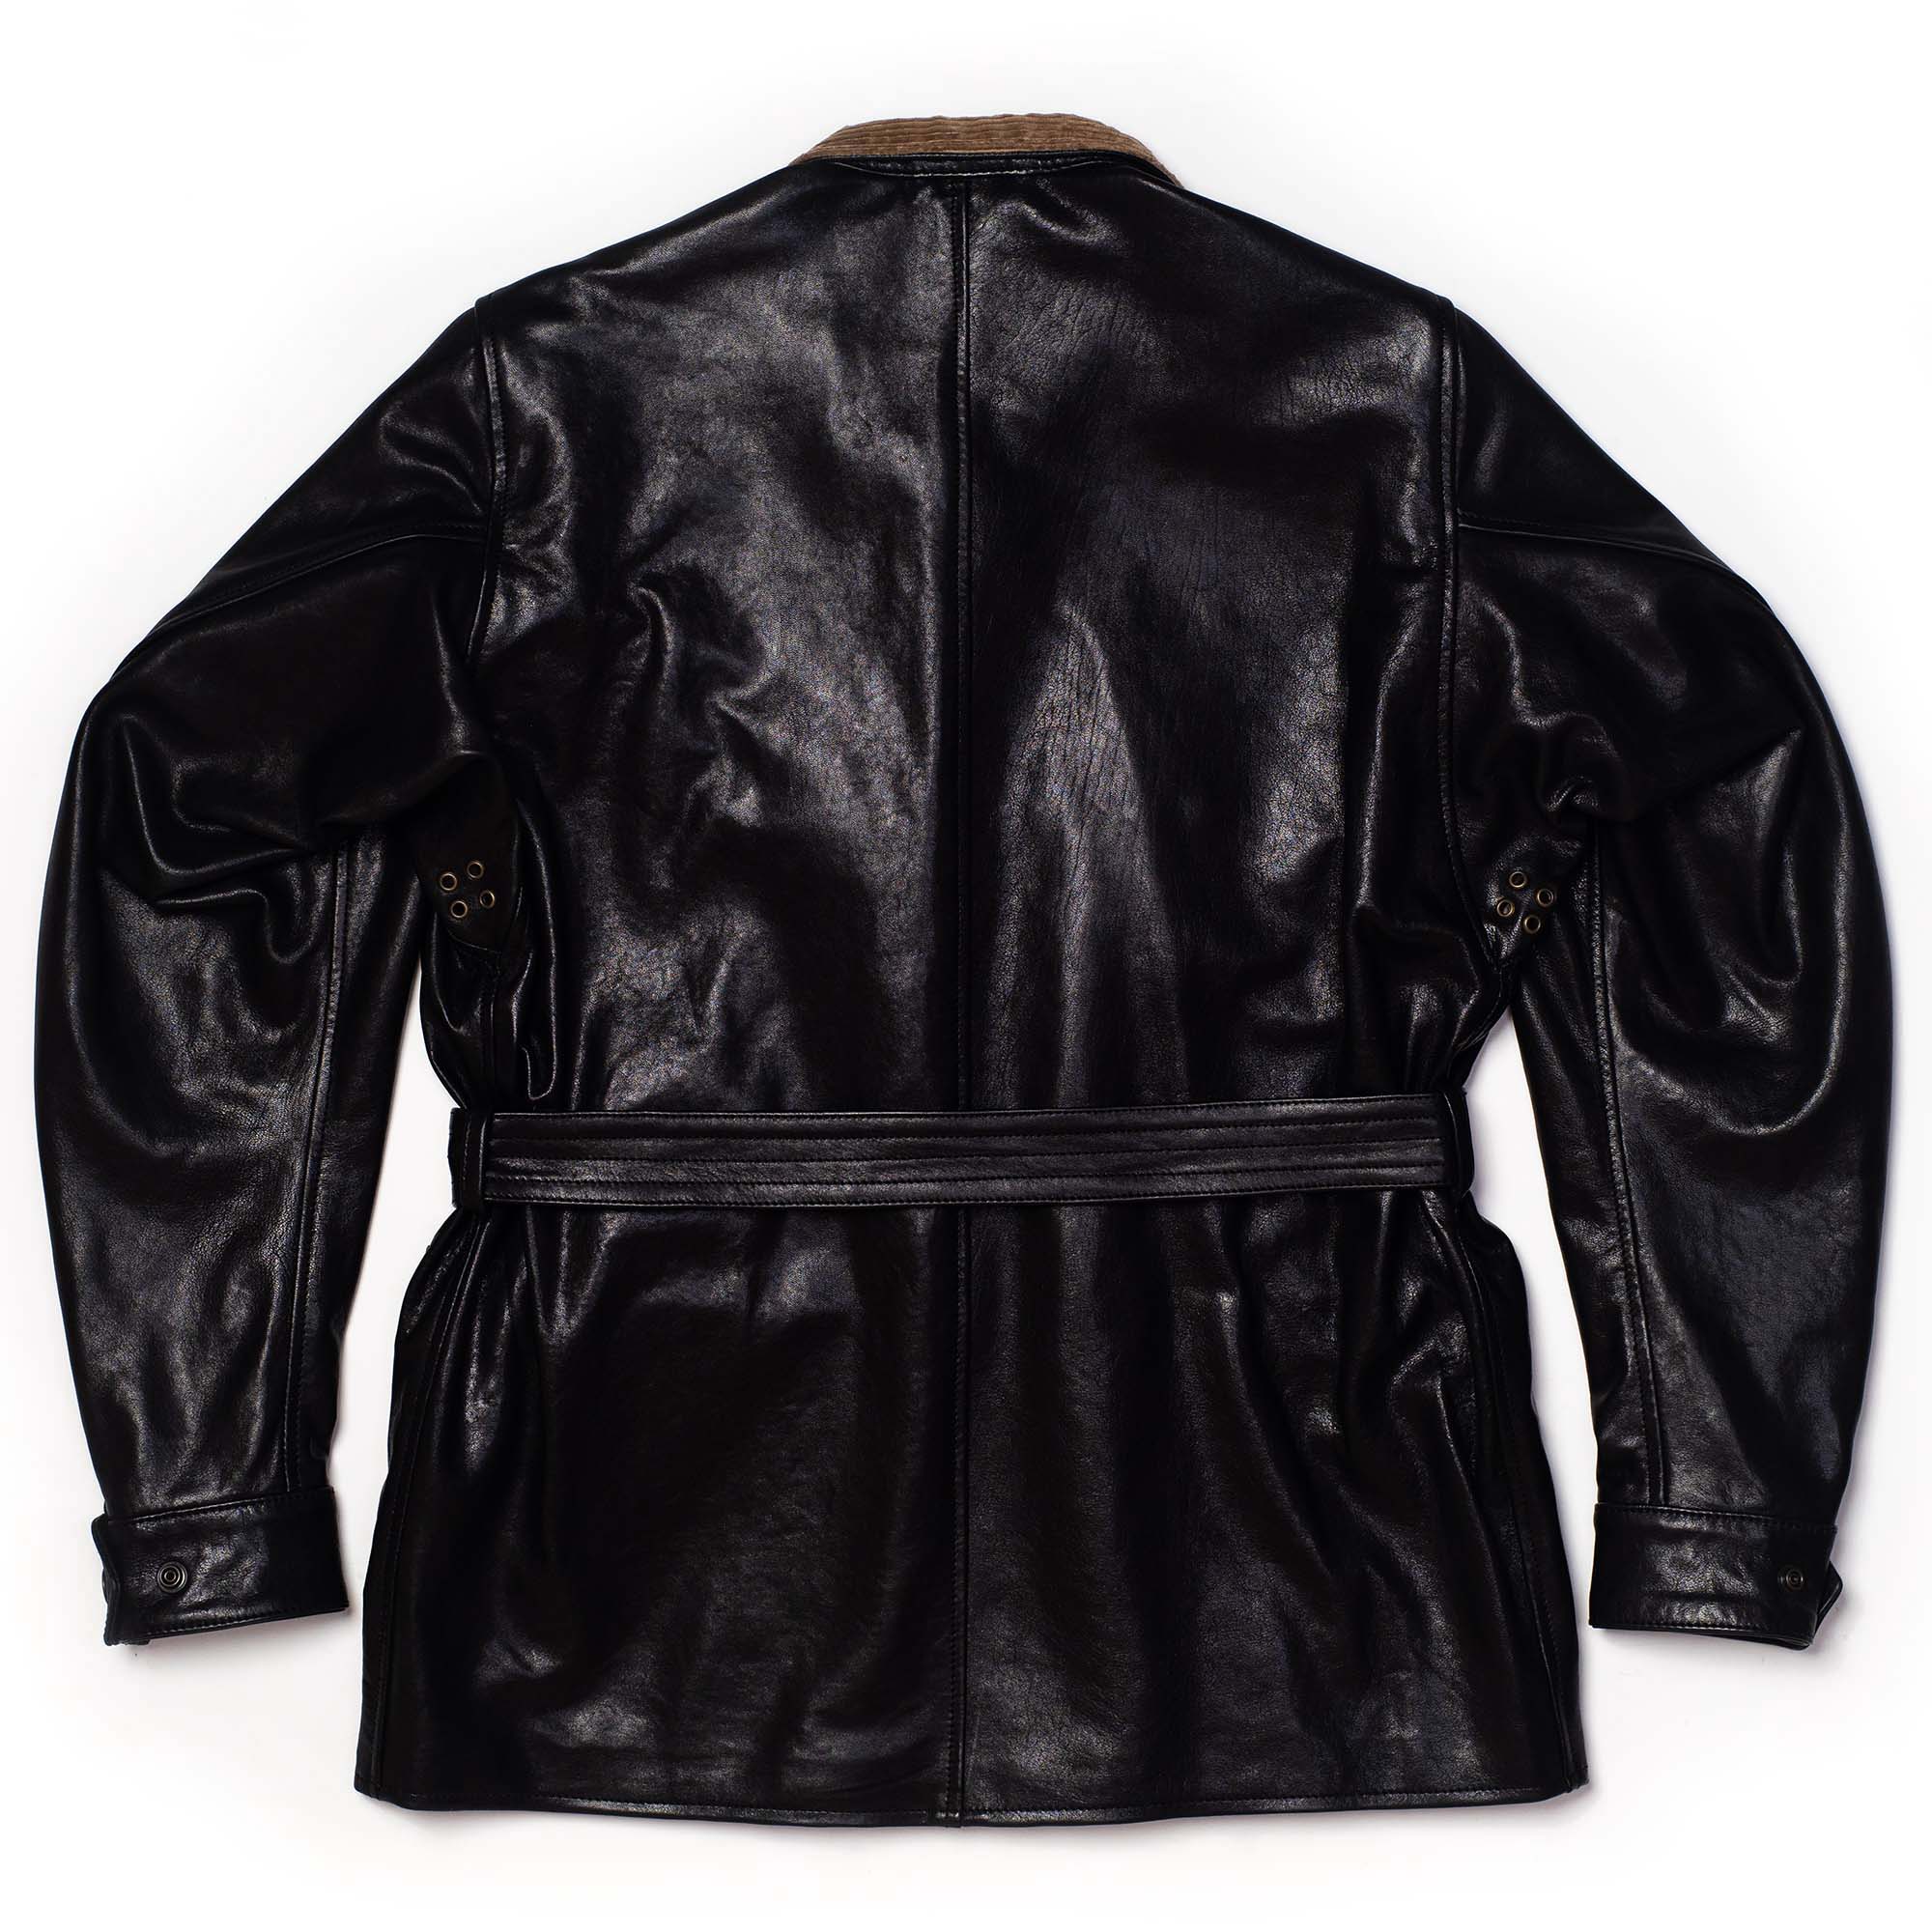 “Explorator” Black Leather Jacket